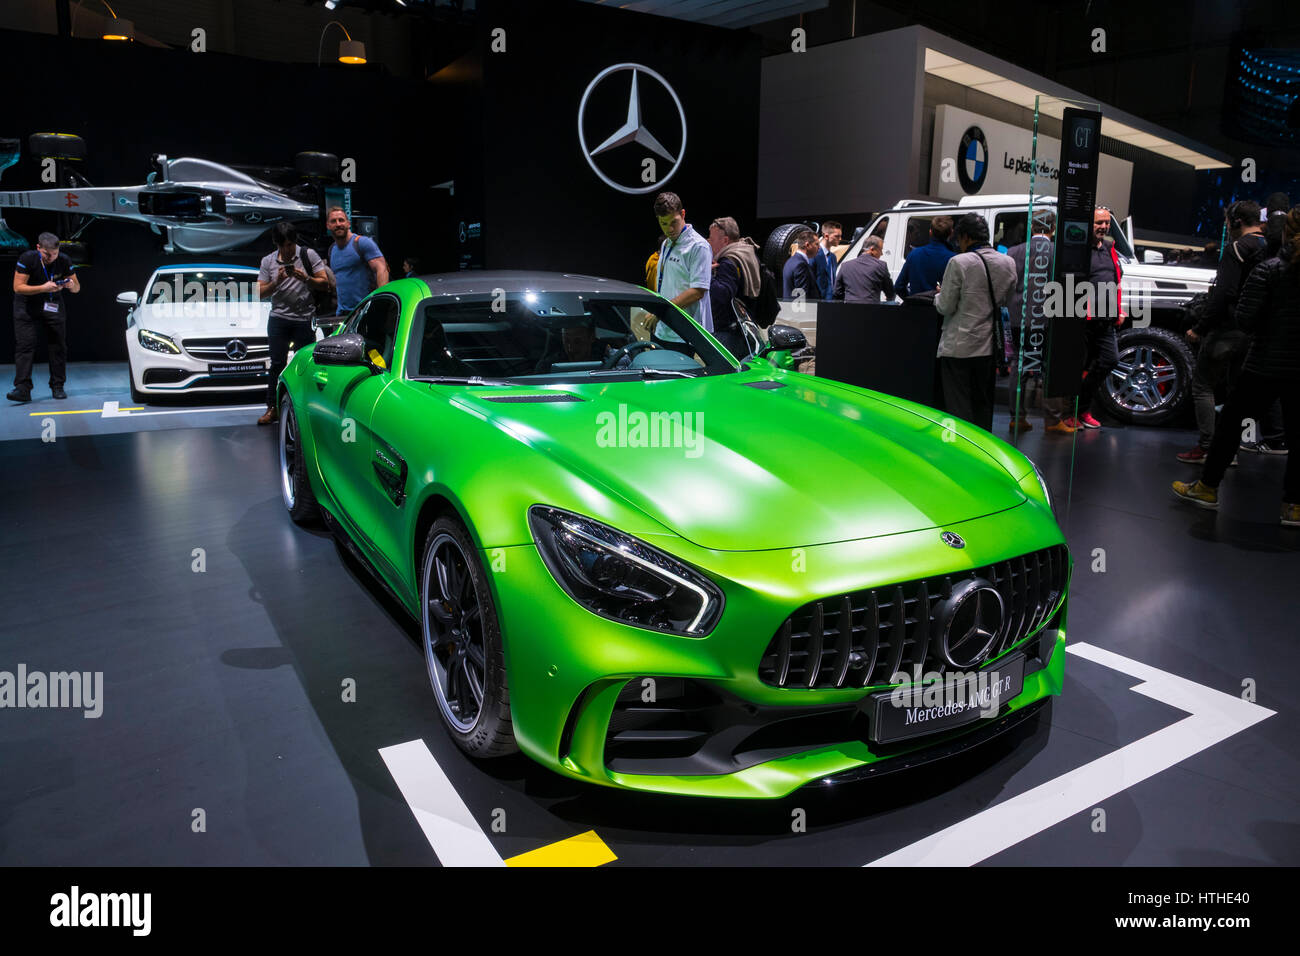 Mercedes AMG GT R at Geneva International Motor Show in Geneva Switzerland 2017 Stock Photo